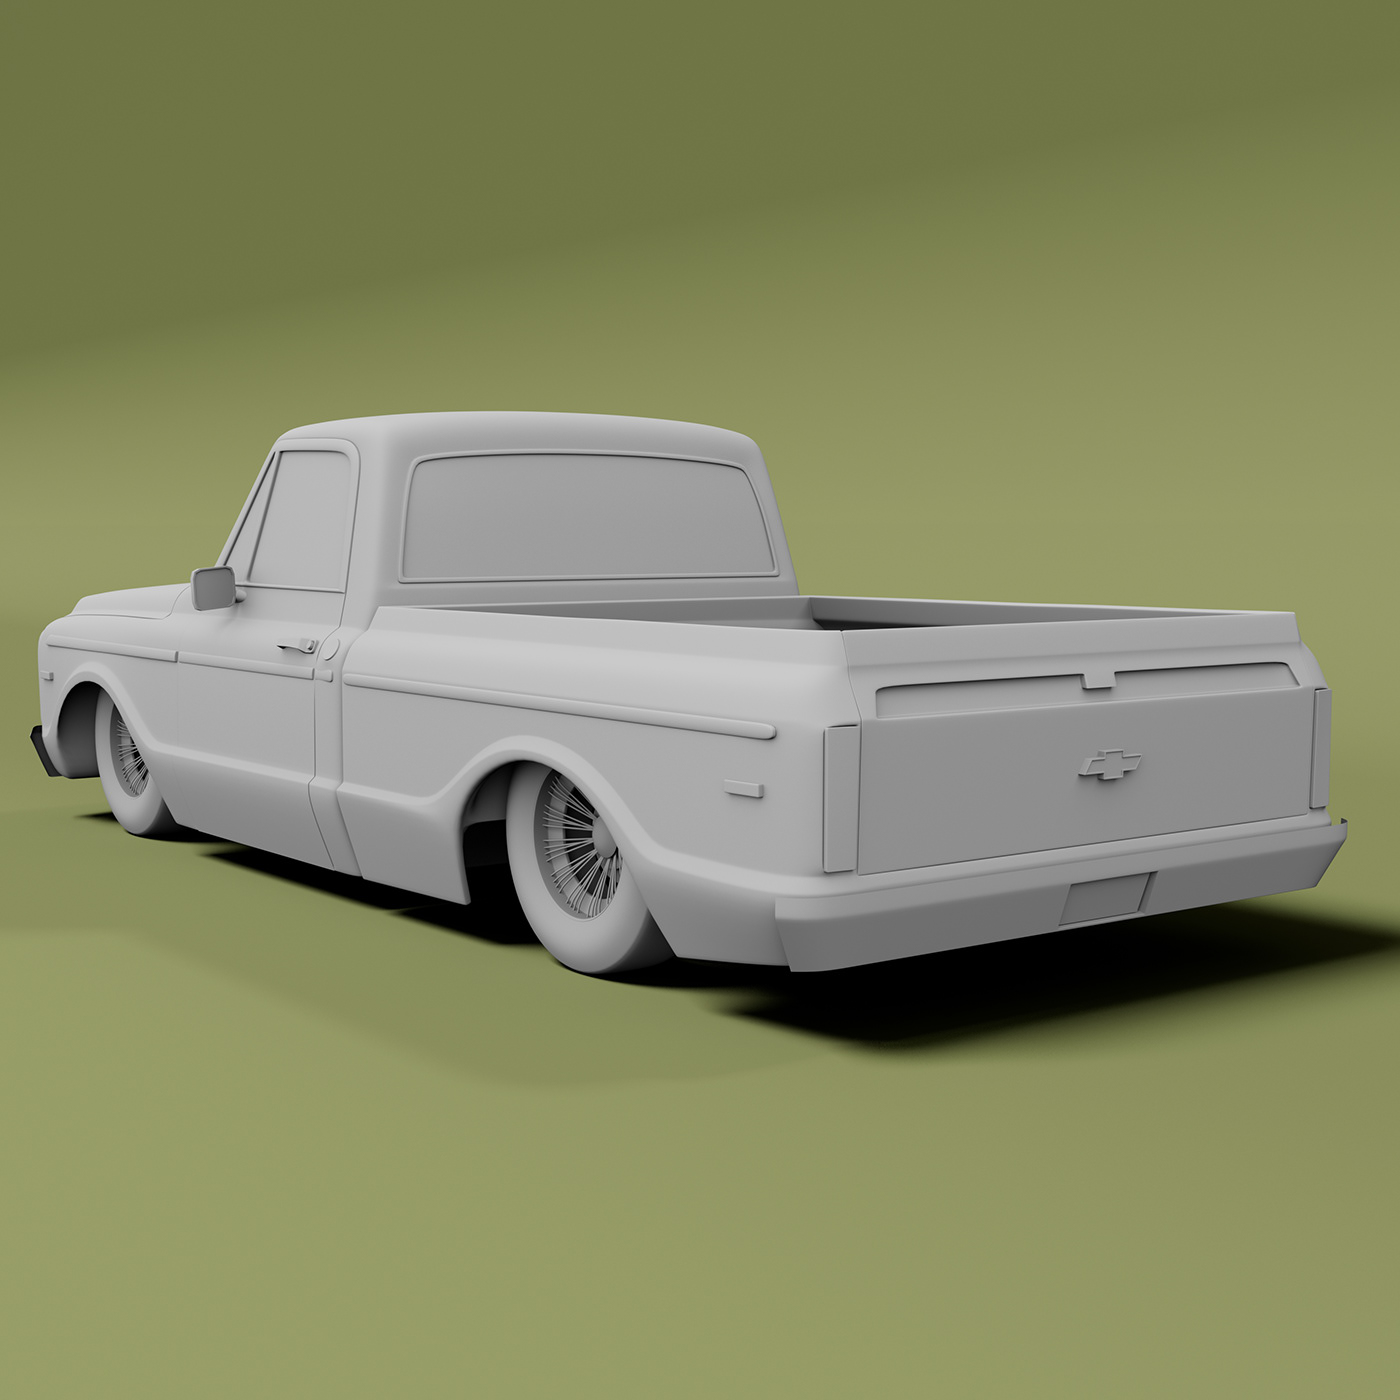 autodesk maya photoshop 3dmodeling Render 3D car modeling Maya 3d modeling Chevrolet Silverado Substance Painter